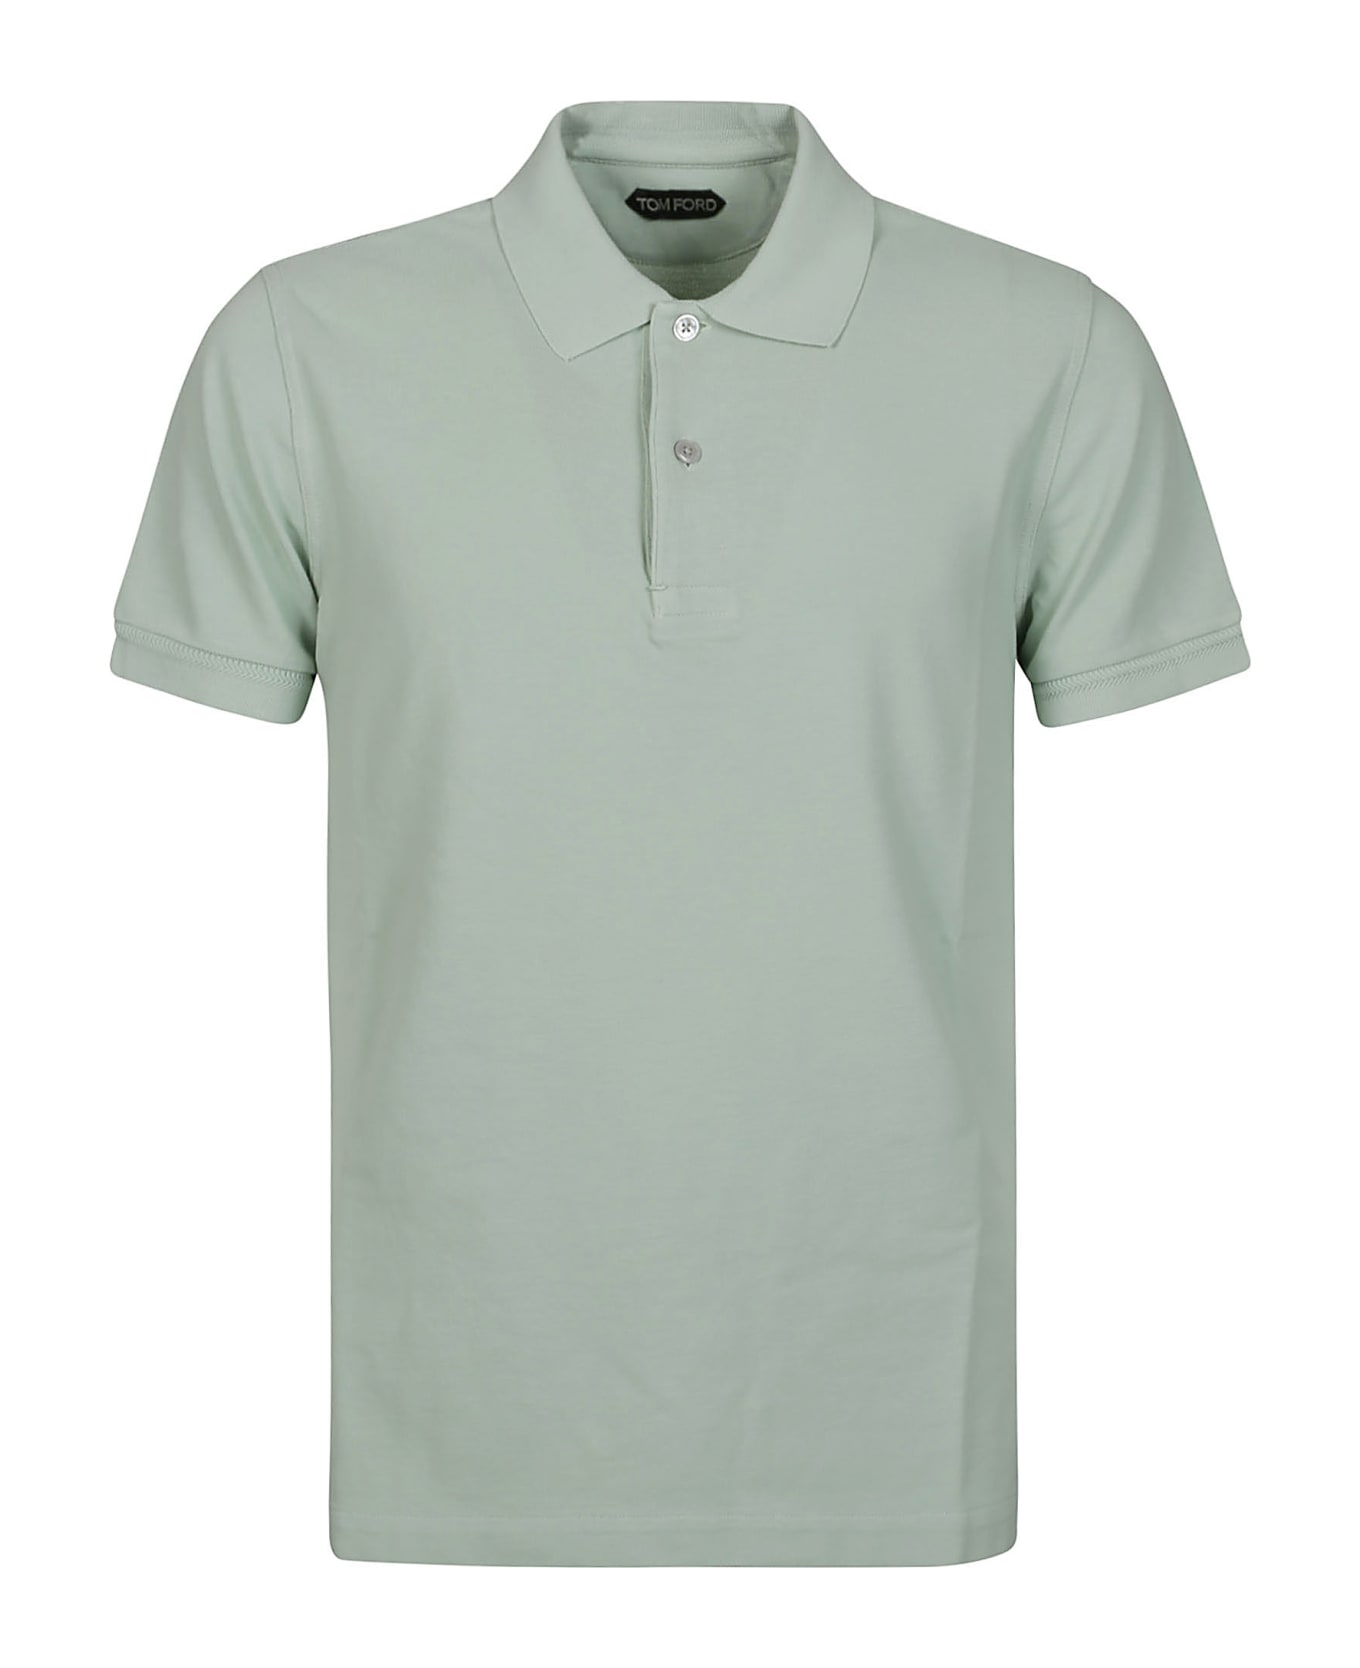 Tom Ford Tennis Piquet Short Sleeve Polo Shirt - Pale Mint